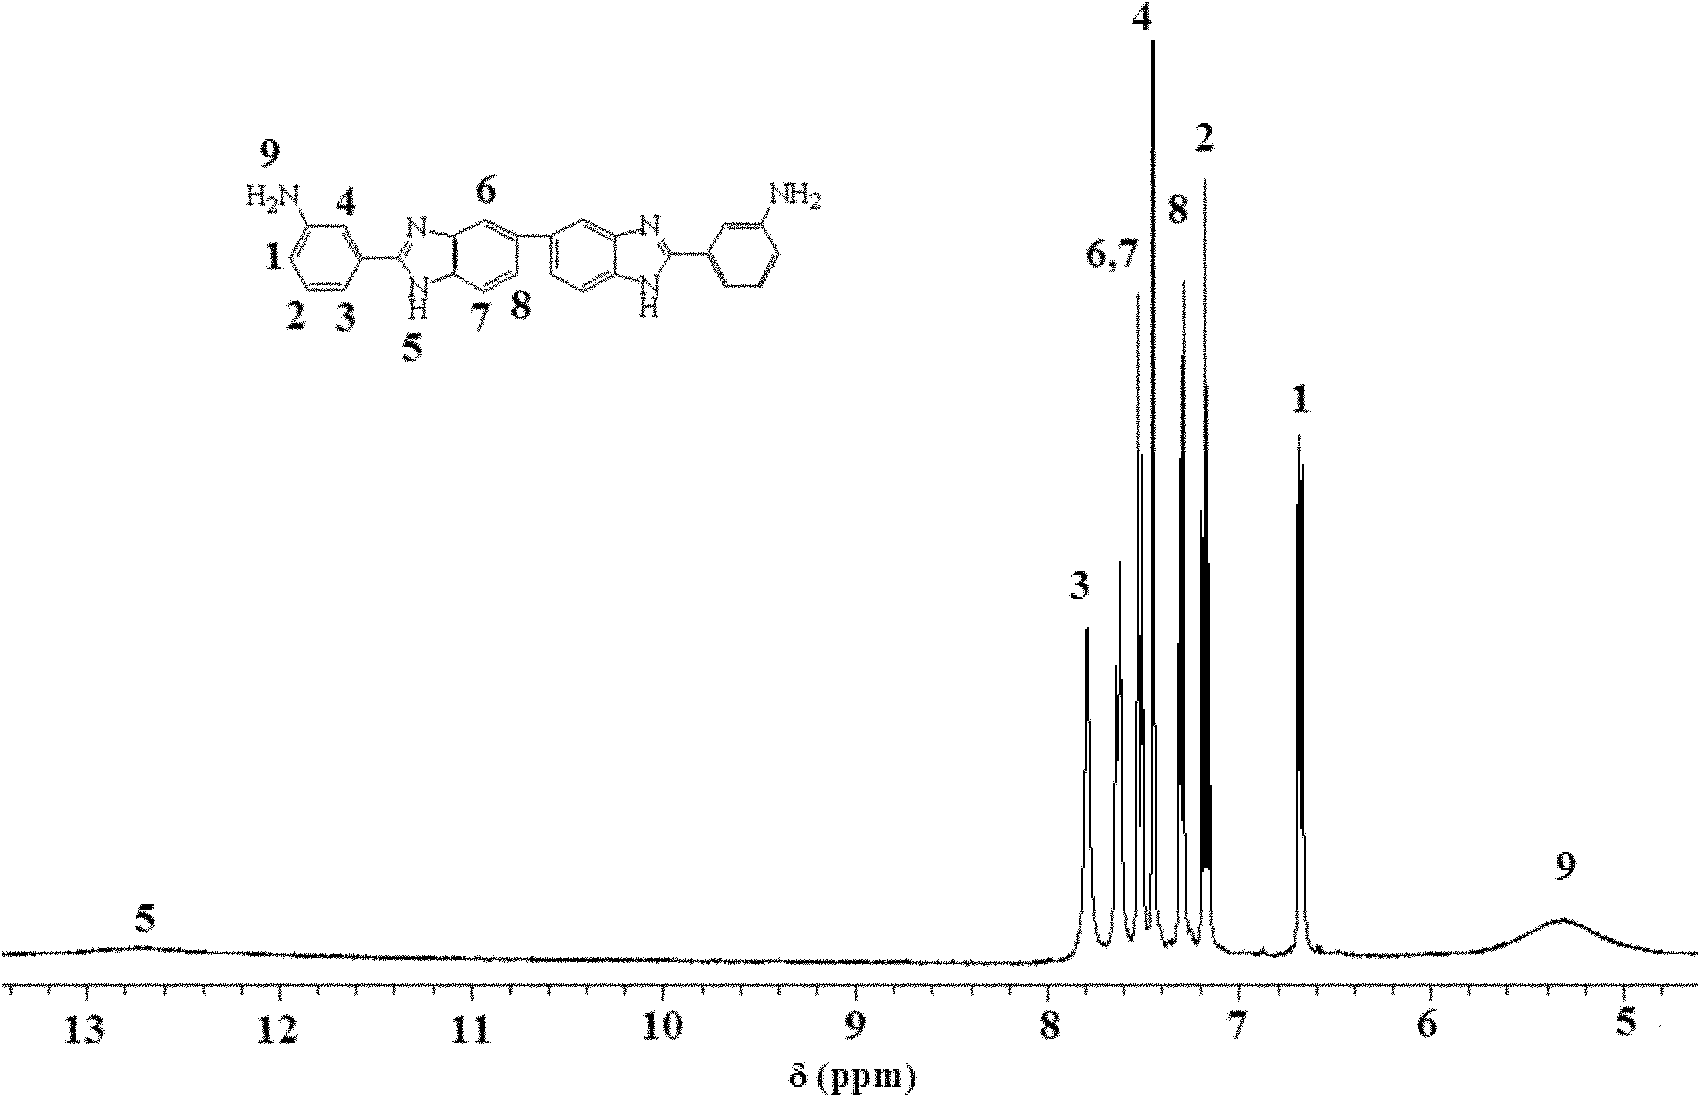 Aromatic diamine containing imidazolyl and preparation method thereof